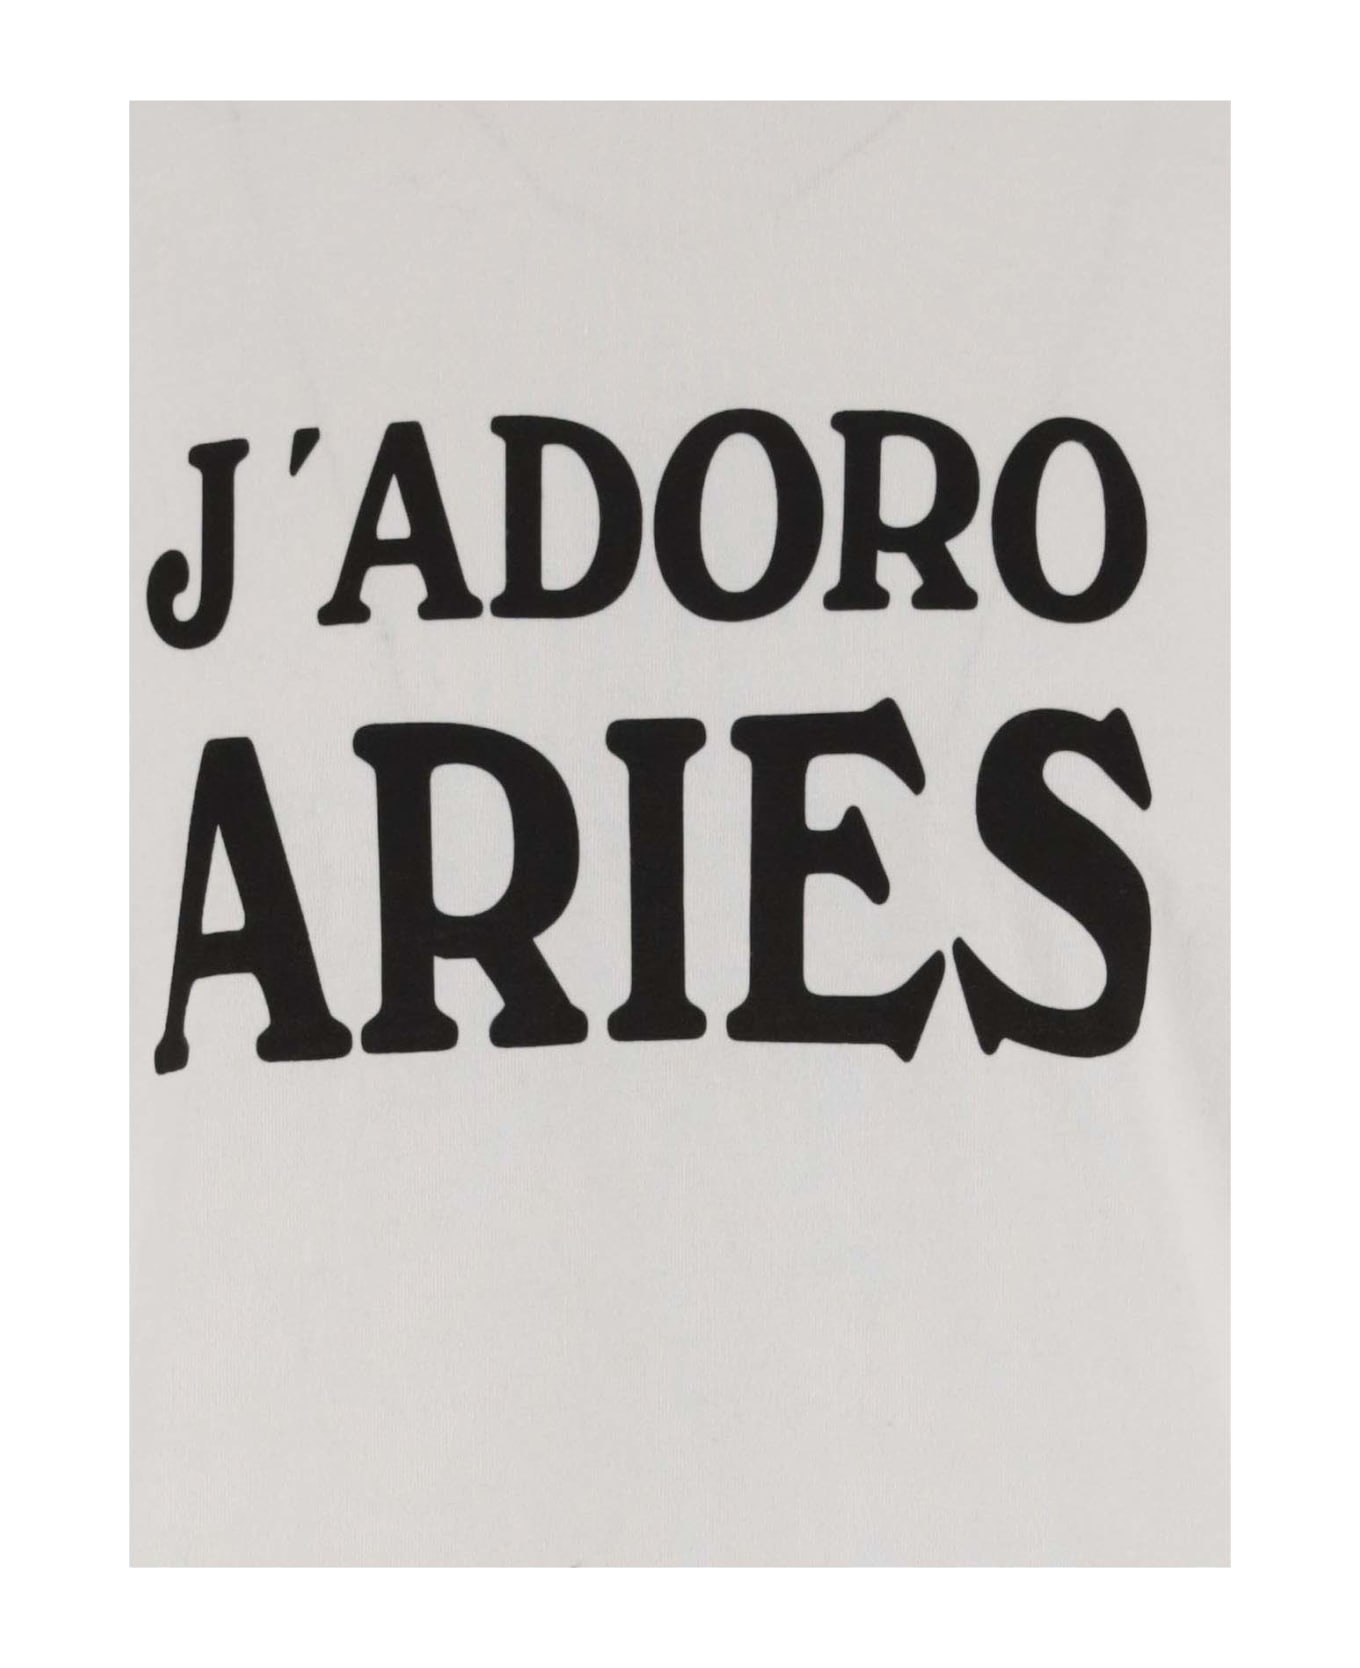 Aries J'adoro Cotton T-shirt